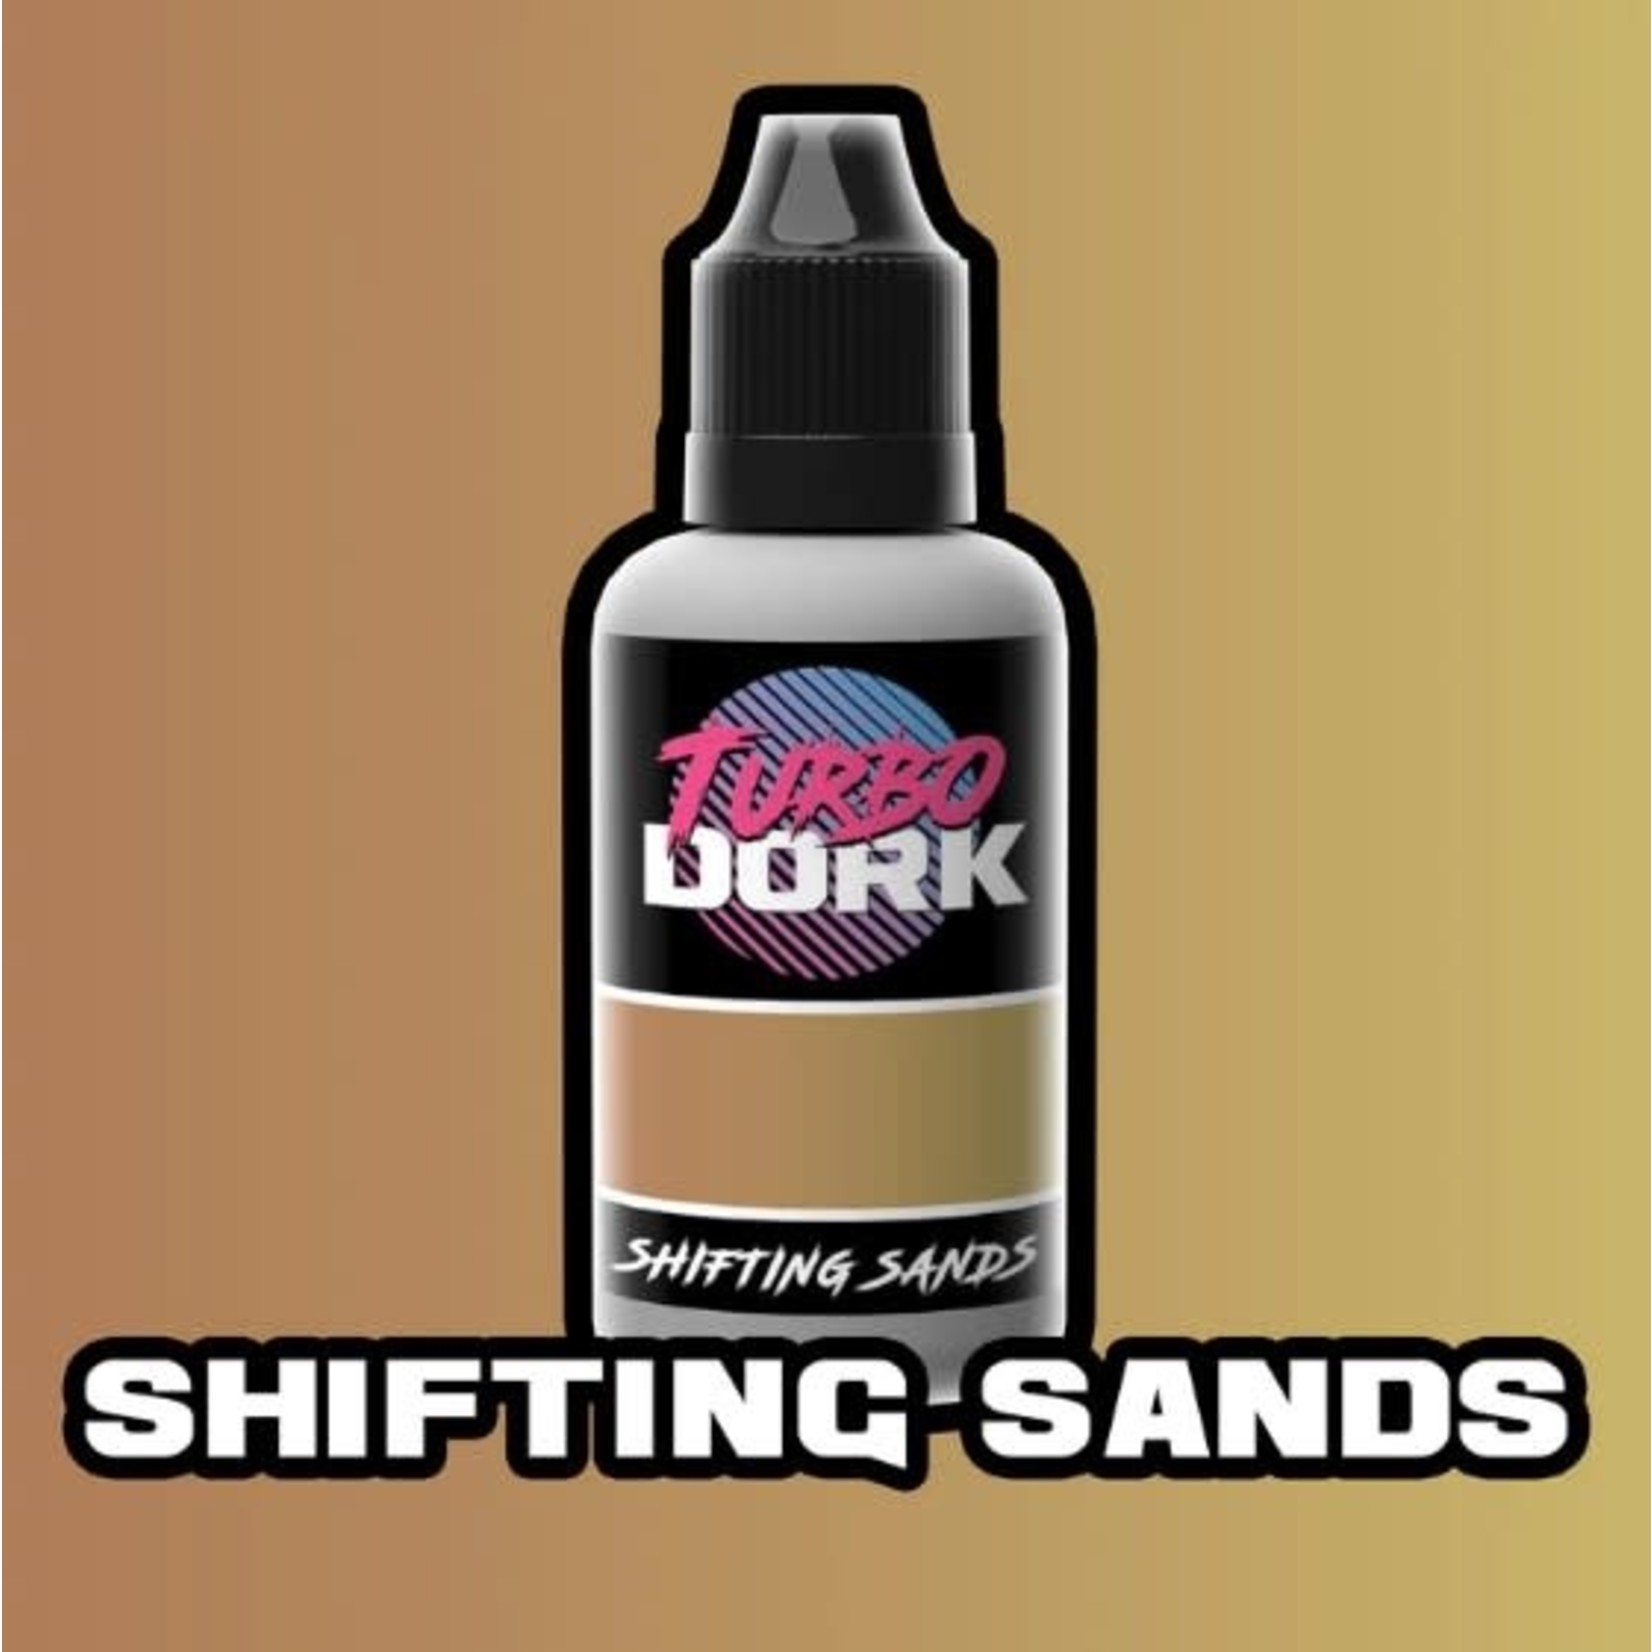 Turbo Dork Shifting Sands Turboshift Acrylic Paint